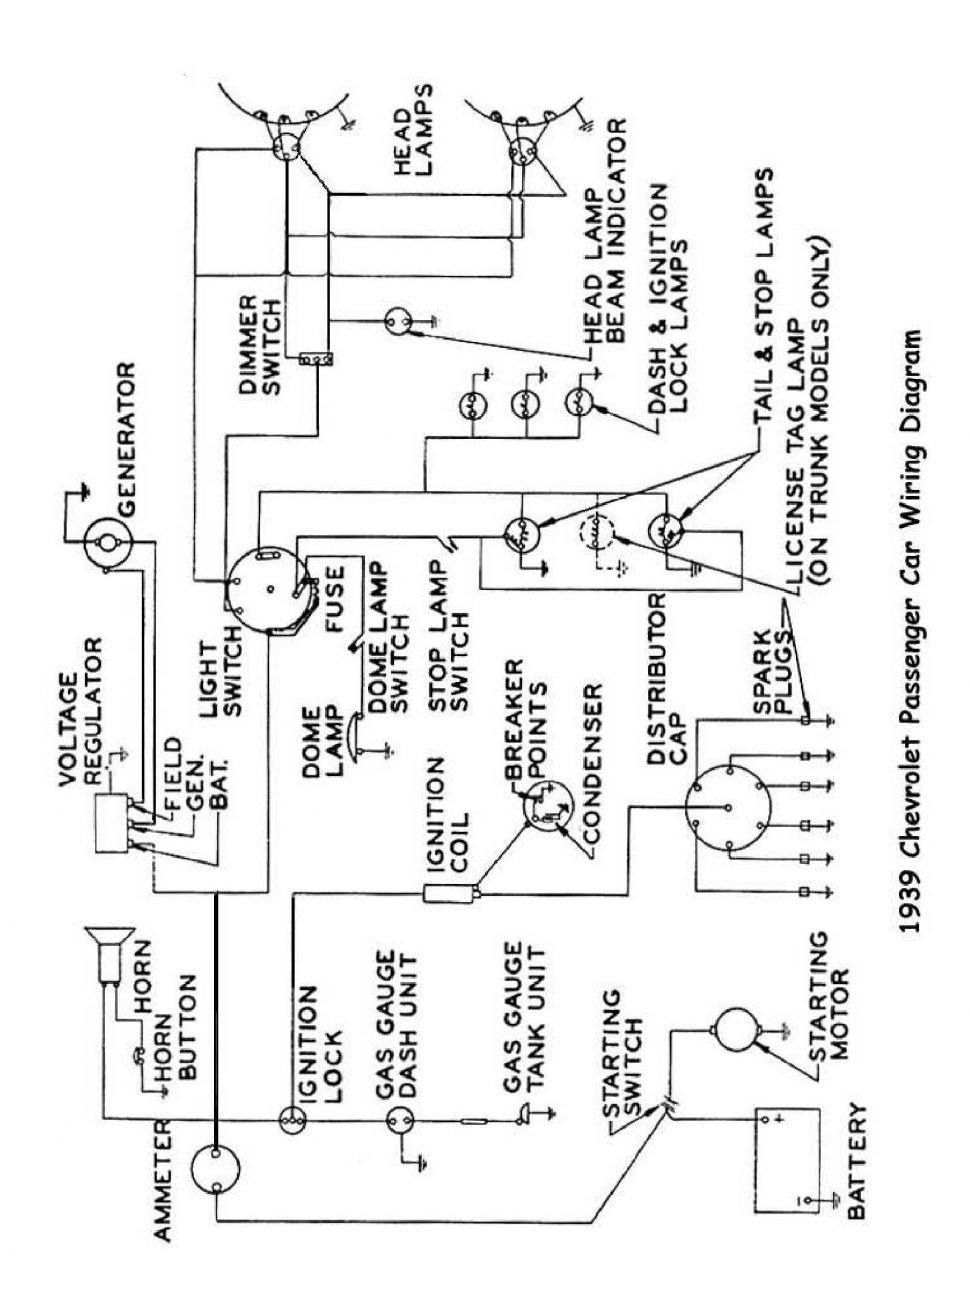 Ultra Remote Car Starter Wiring Diagram | Wiringdiagram - Remote Car Starter Wiring Diagram